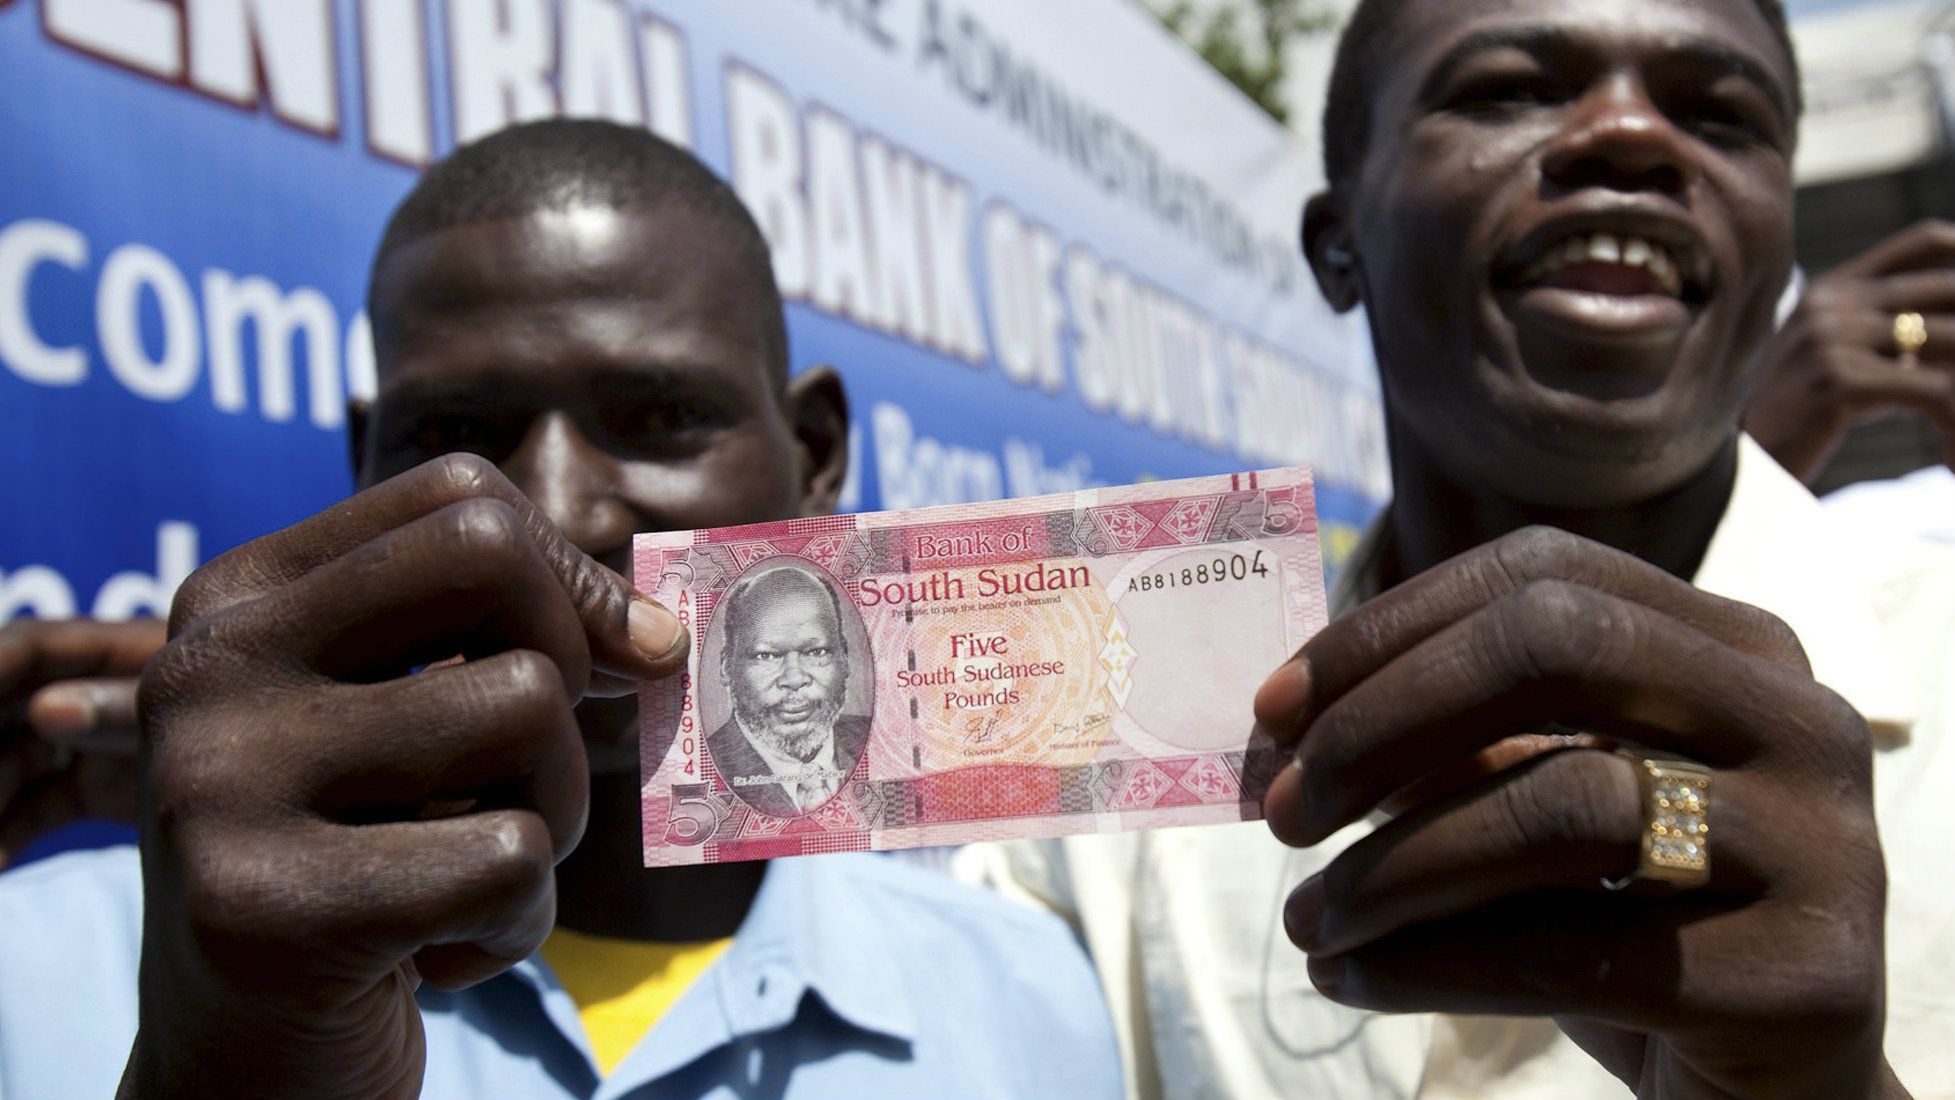 5 South Sudanese pounds